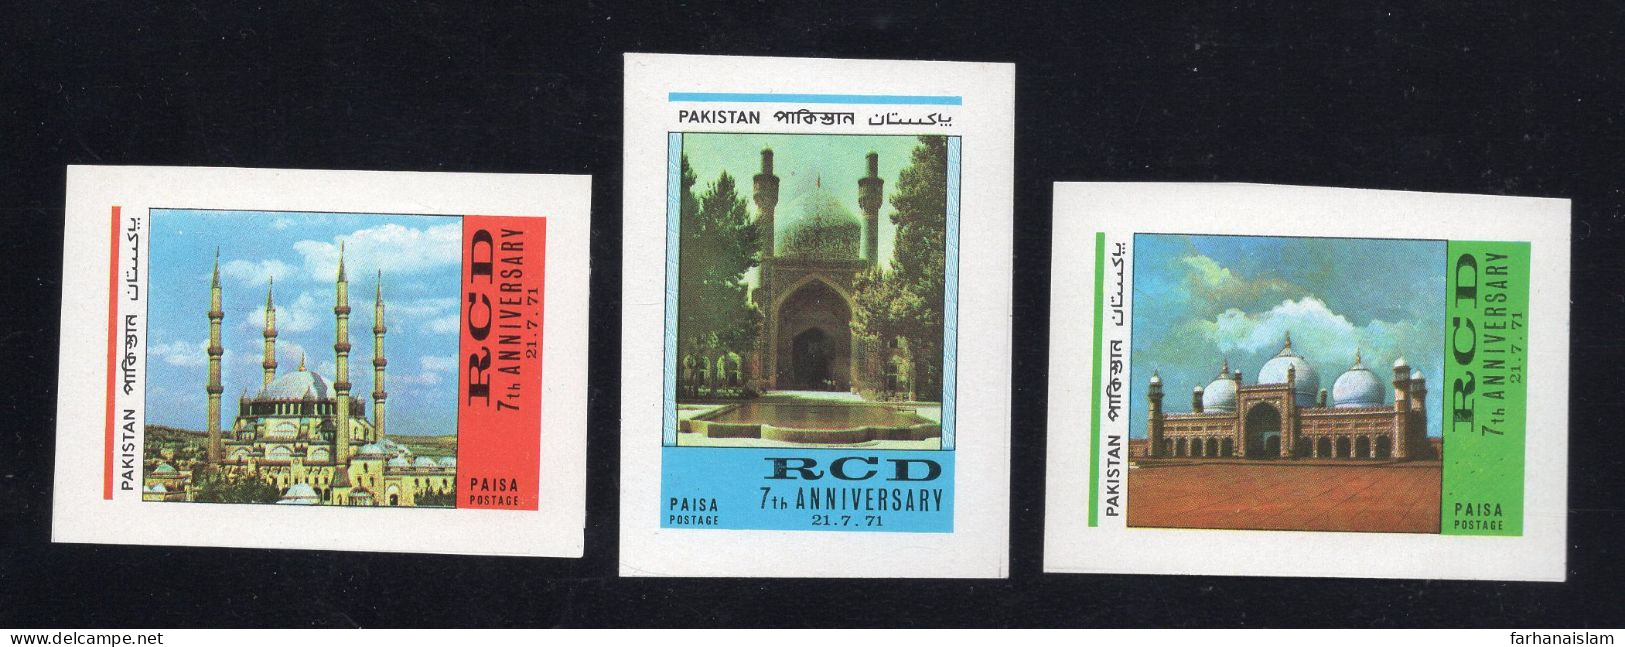 Pakistan 1971, 7th Anniversary Of RCD, Iran Turkey Mosque, PROOF ESSAY .Rare - Pakistan